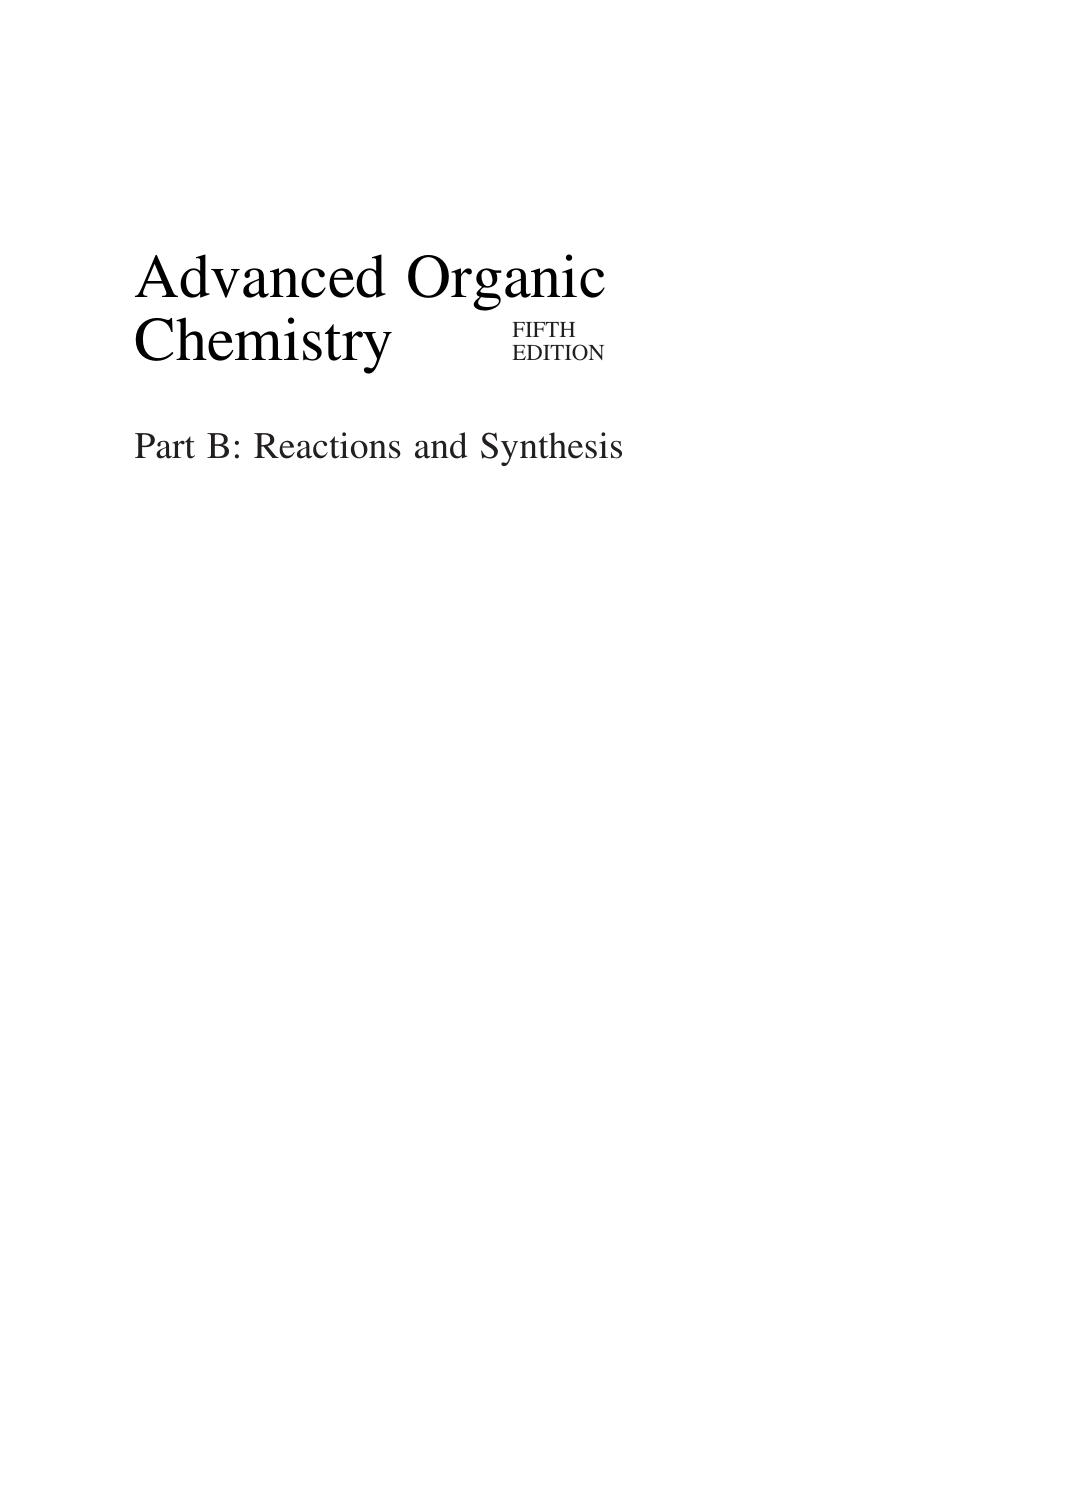 Advanced Organic Chemistry 2007